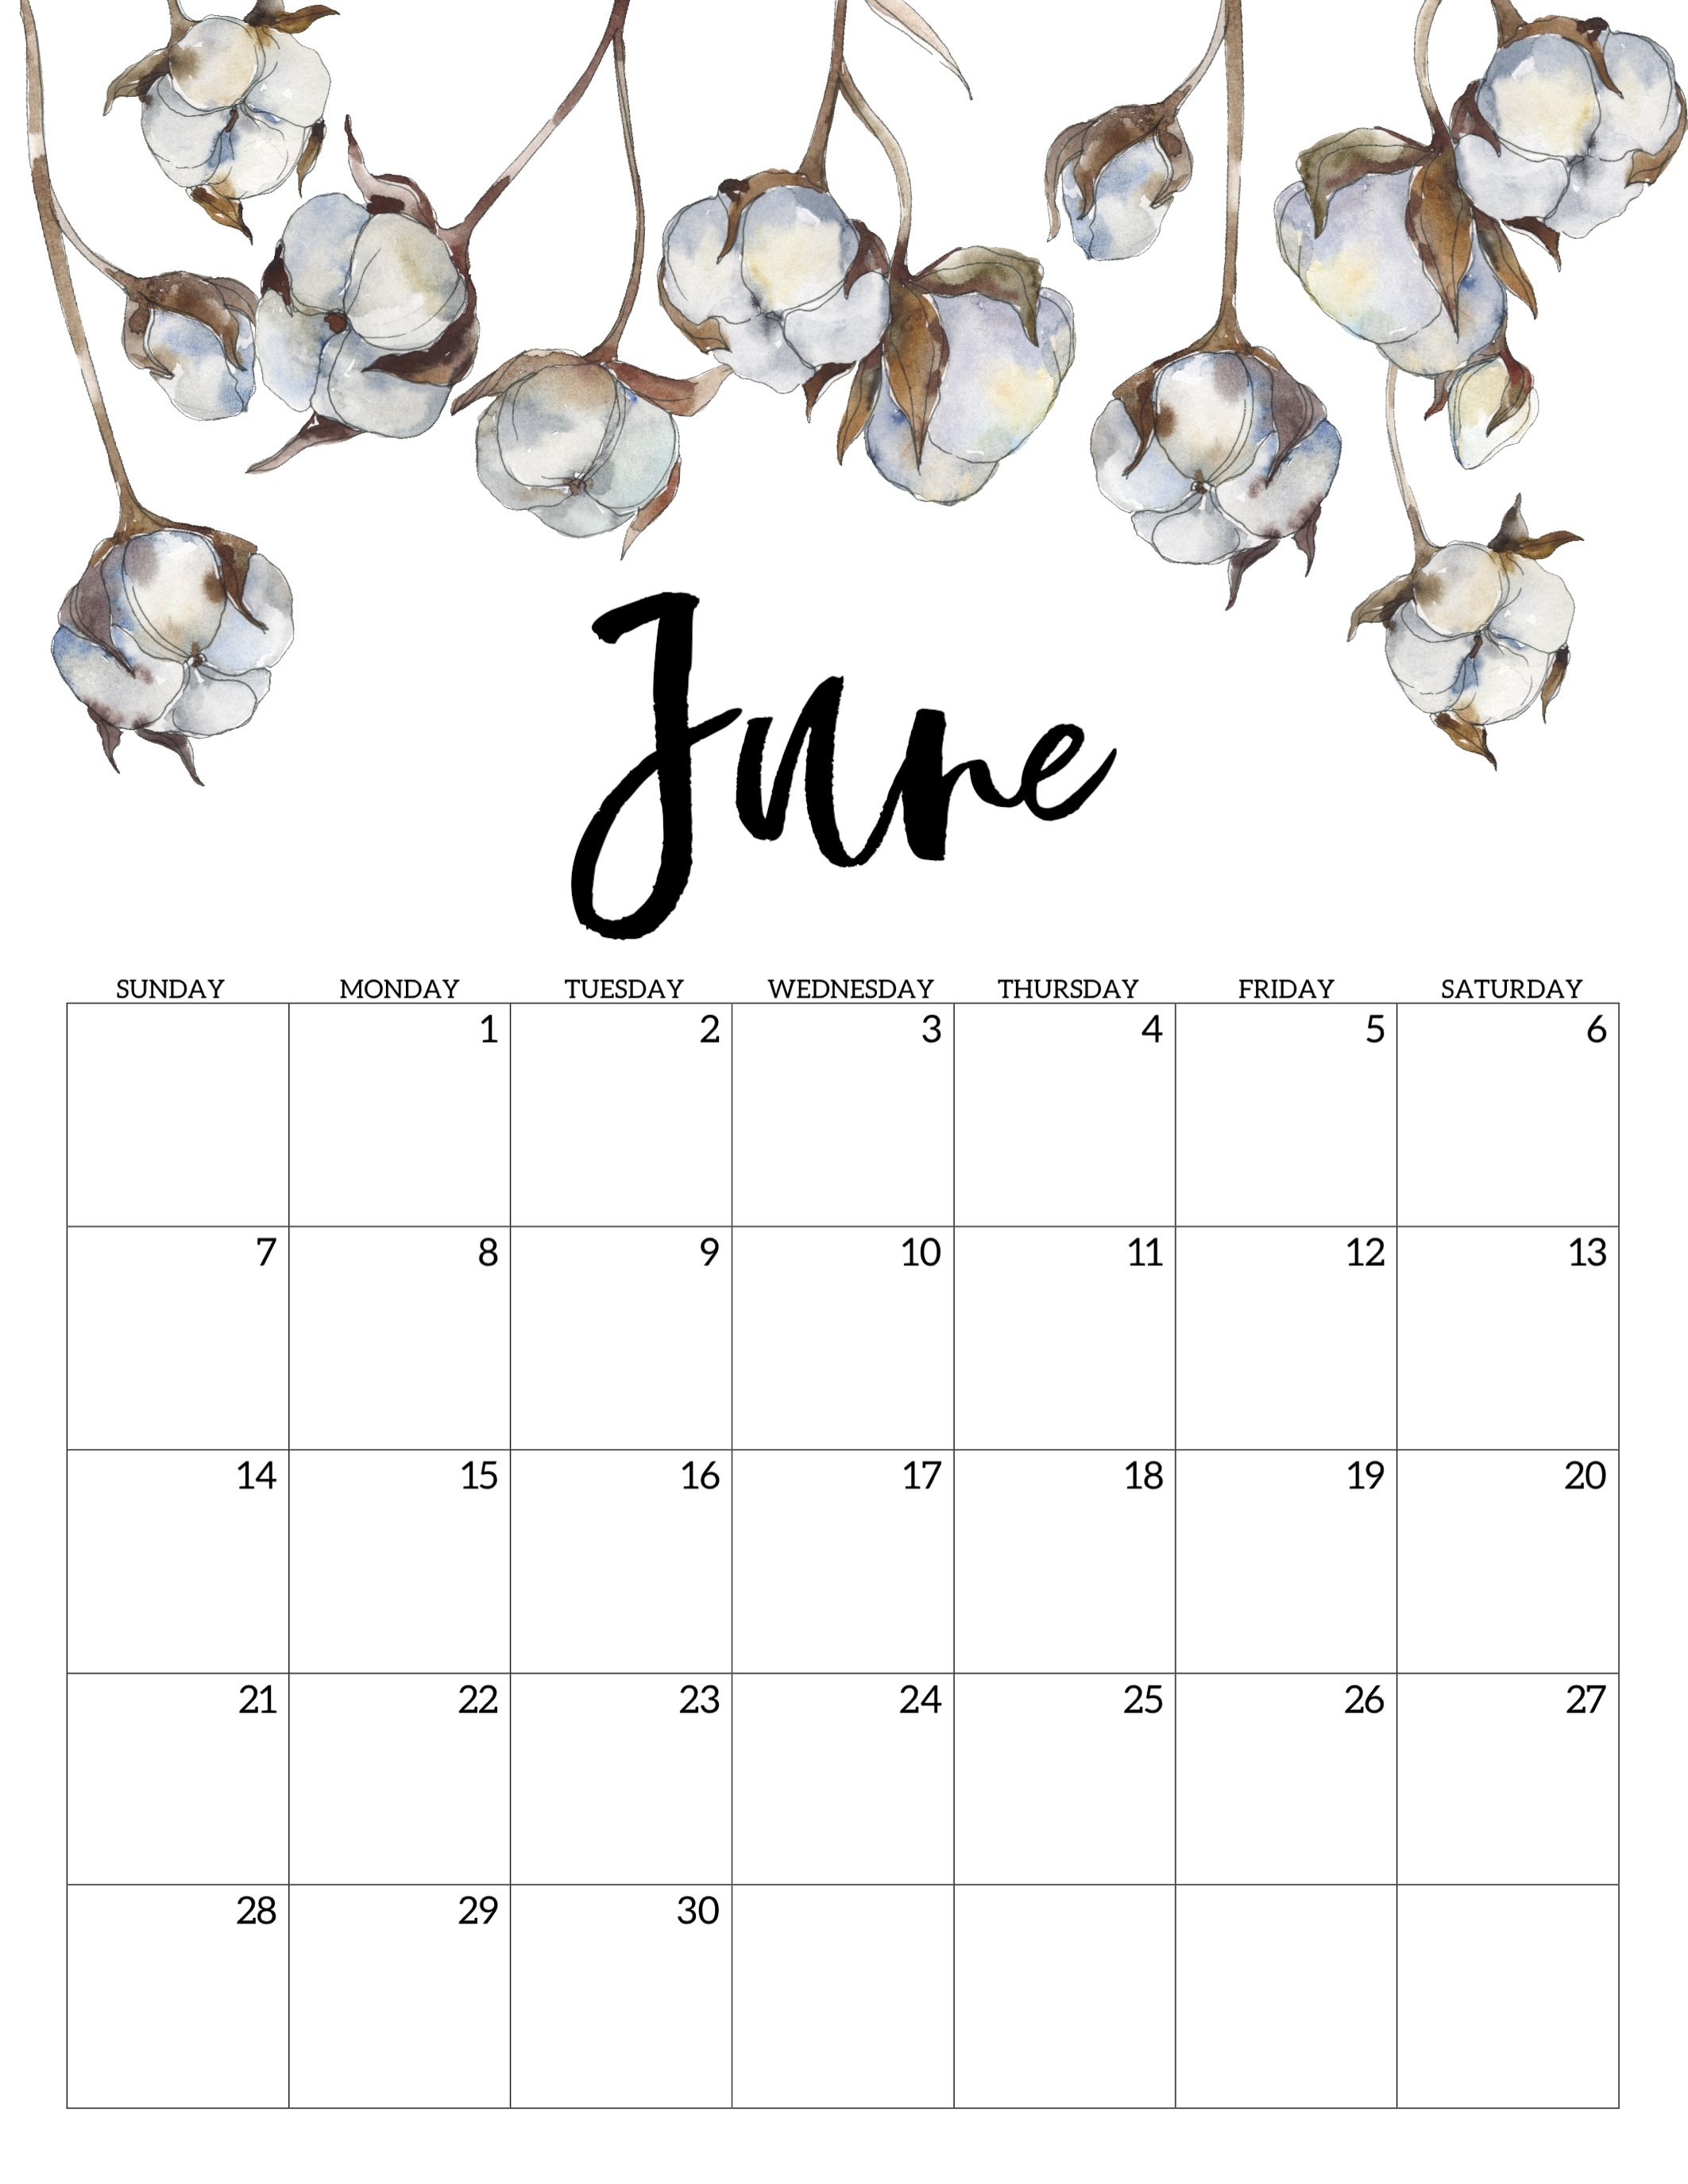 2020 Free Printable Calendar - Floral - Paper Trail Design-January 2020 Calendar Cute